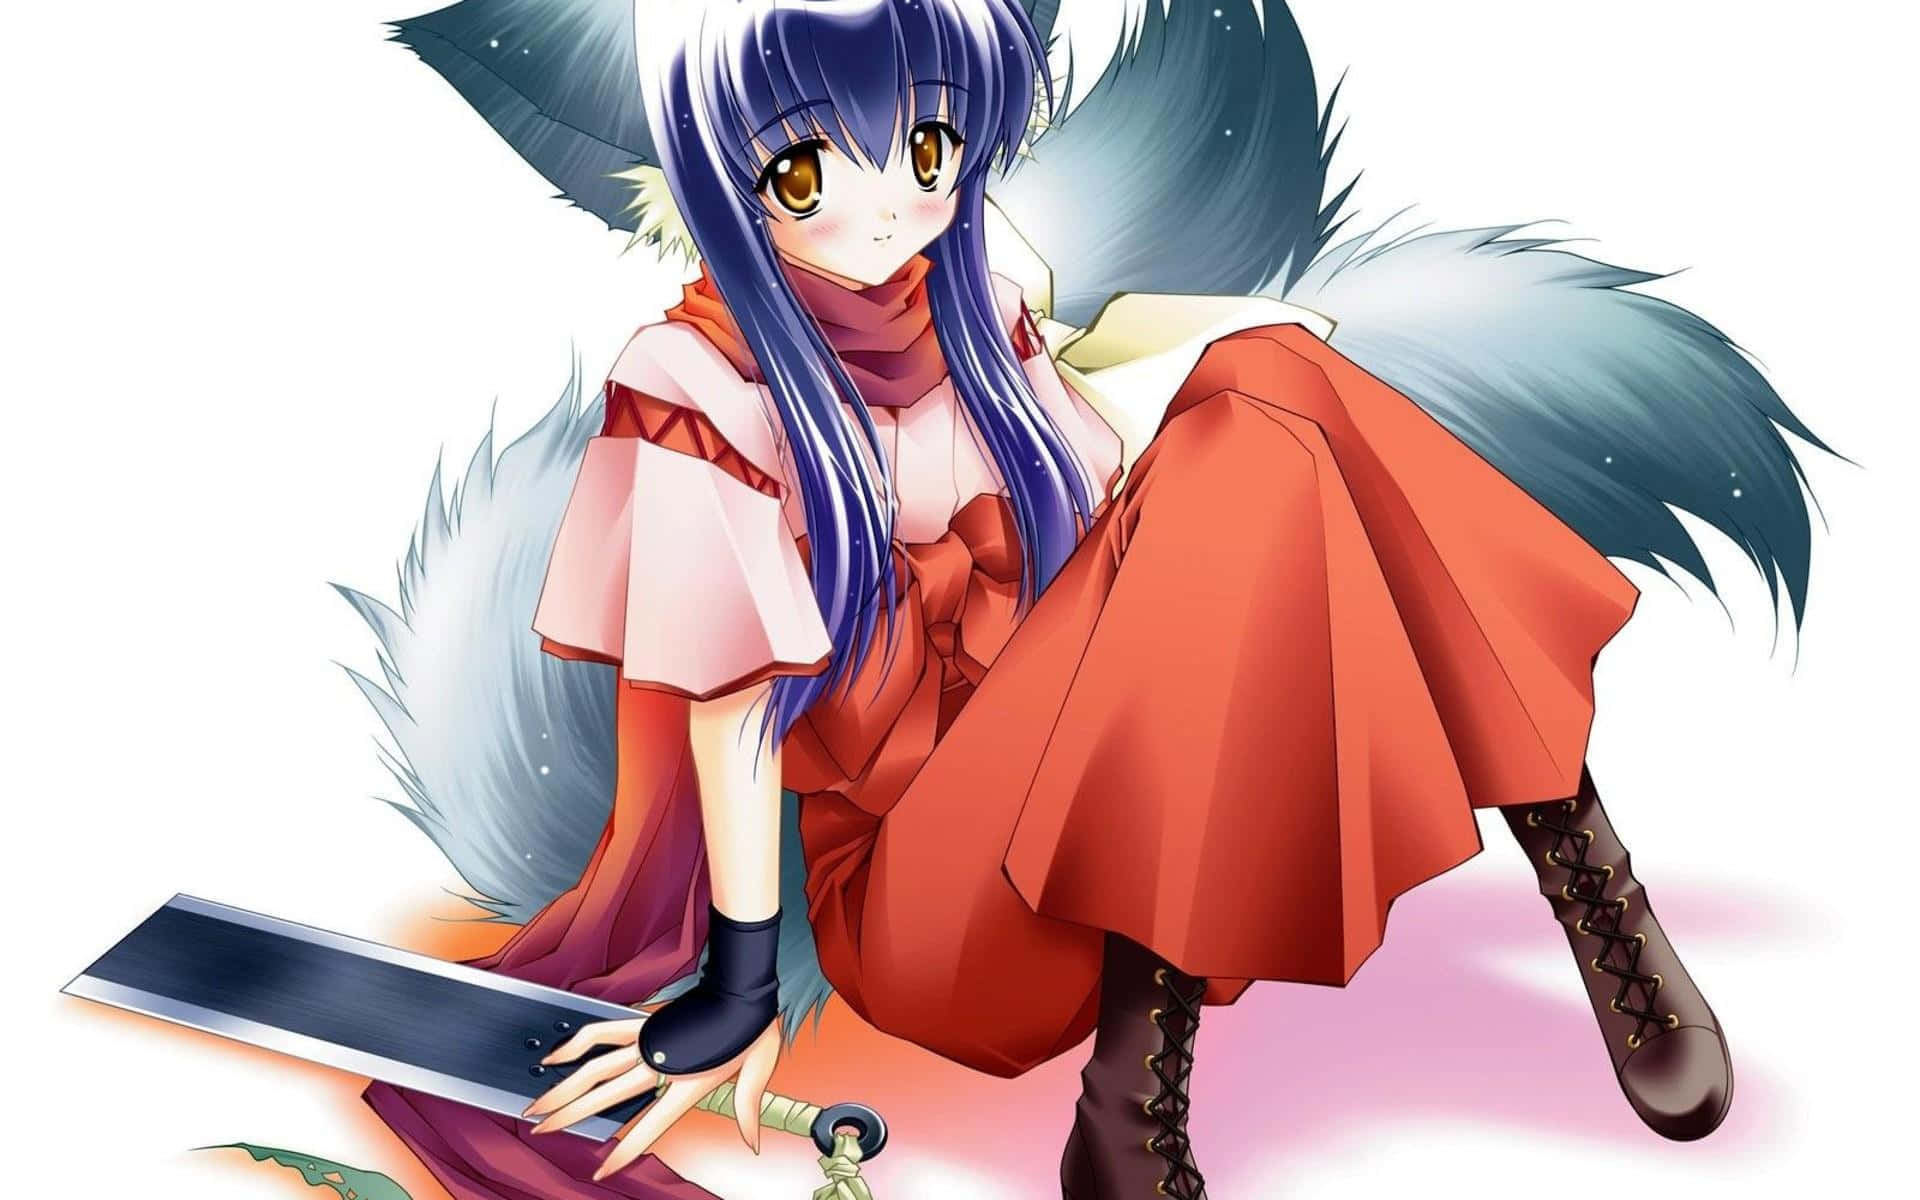 Anime Wolf Girl With Sword.jpg Wallpaper